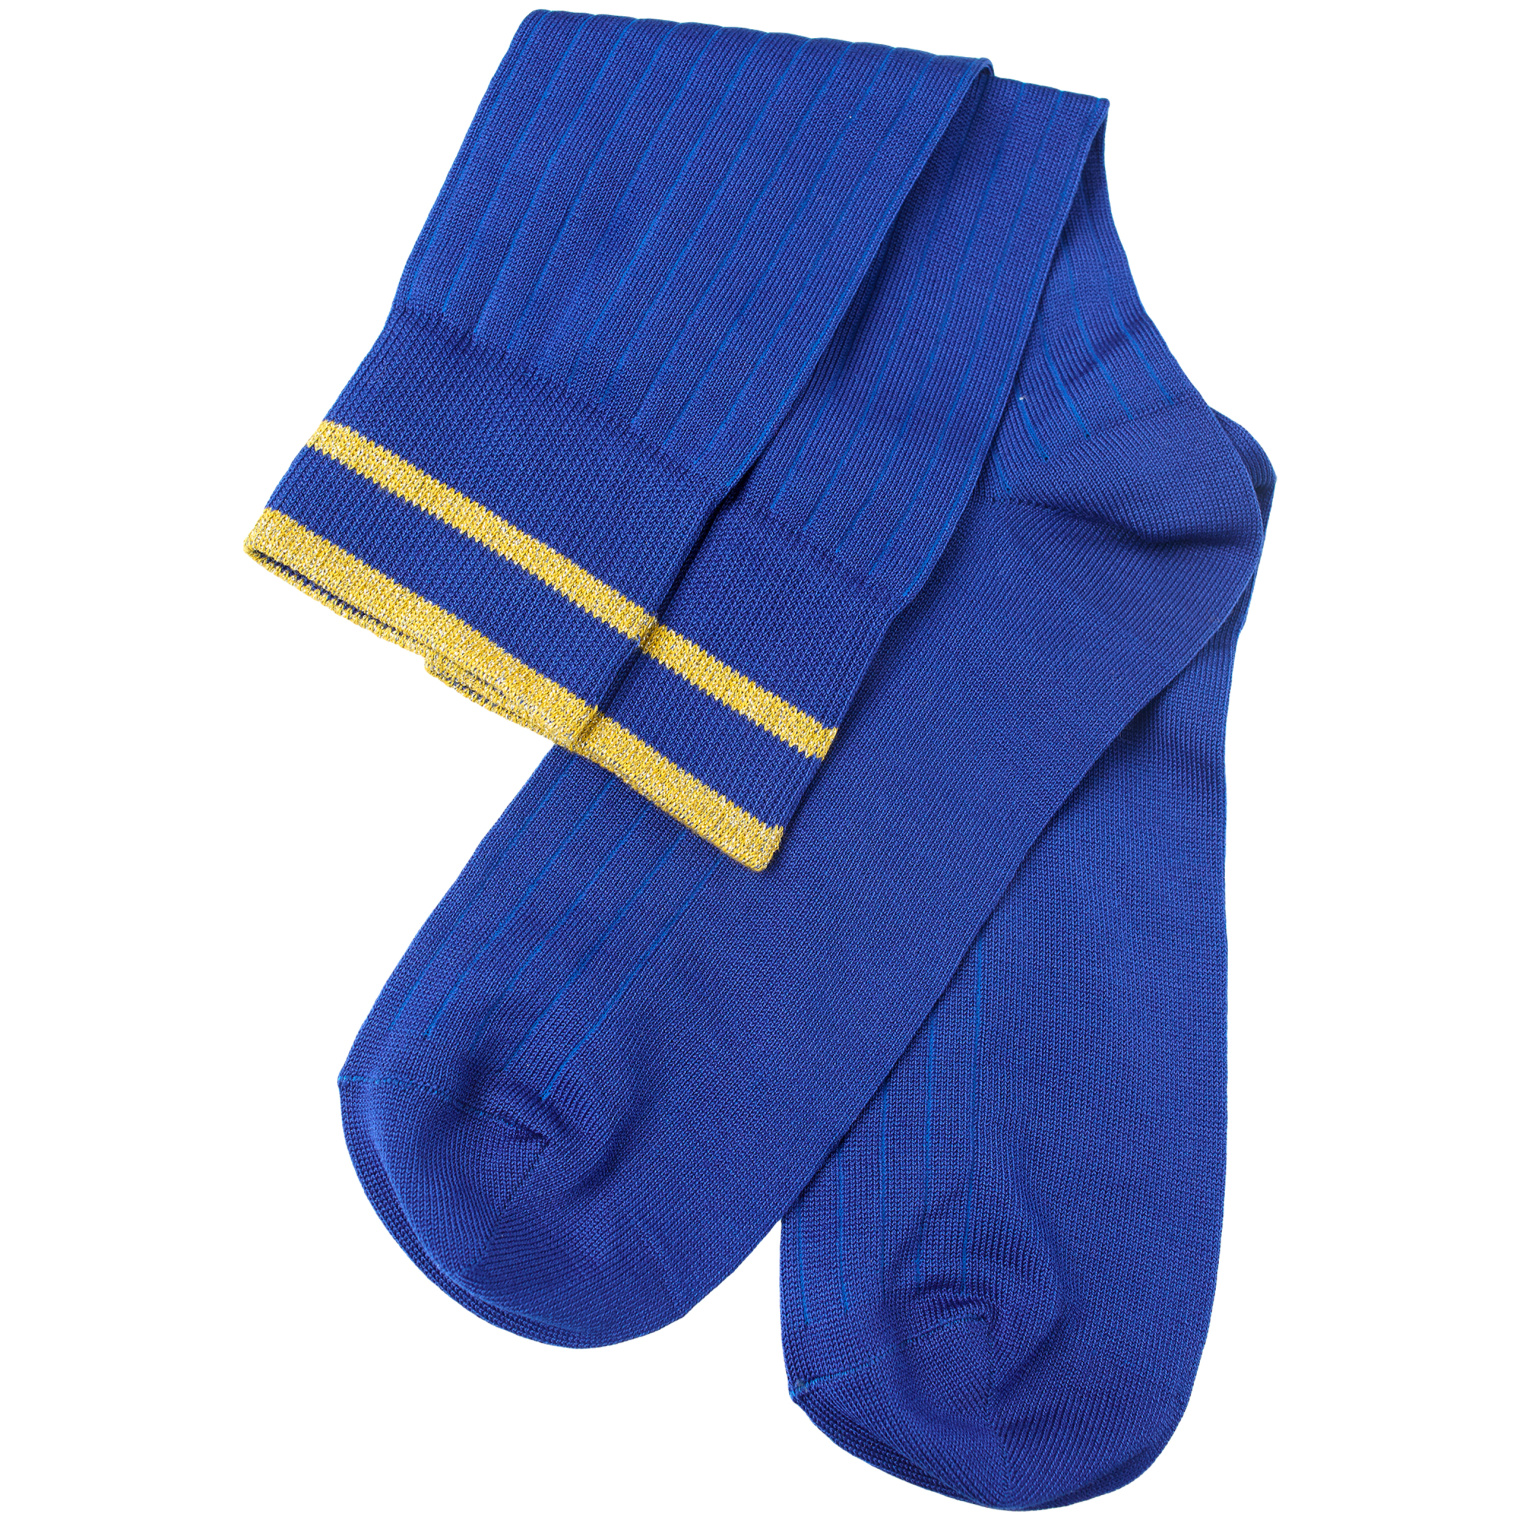 Marni Blue cotton socks